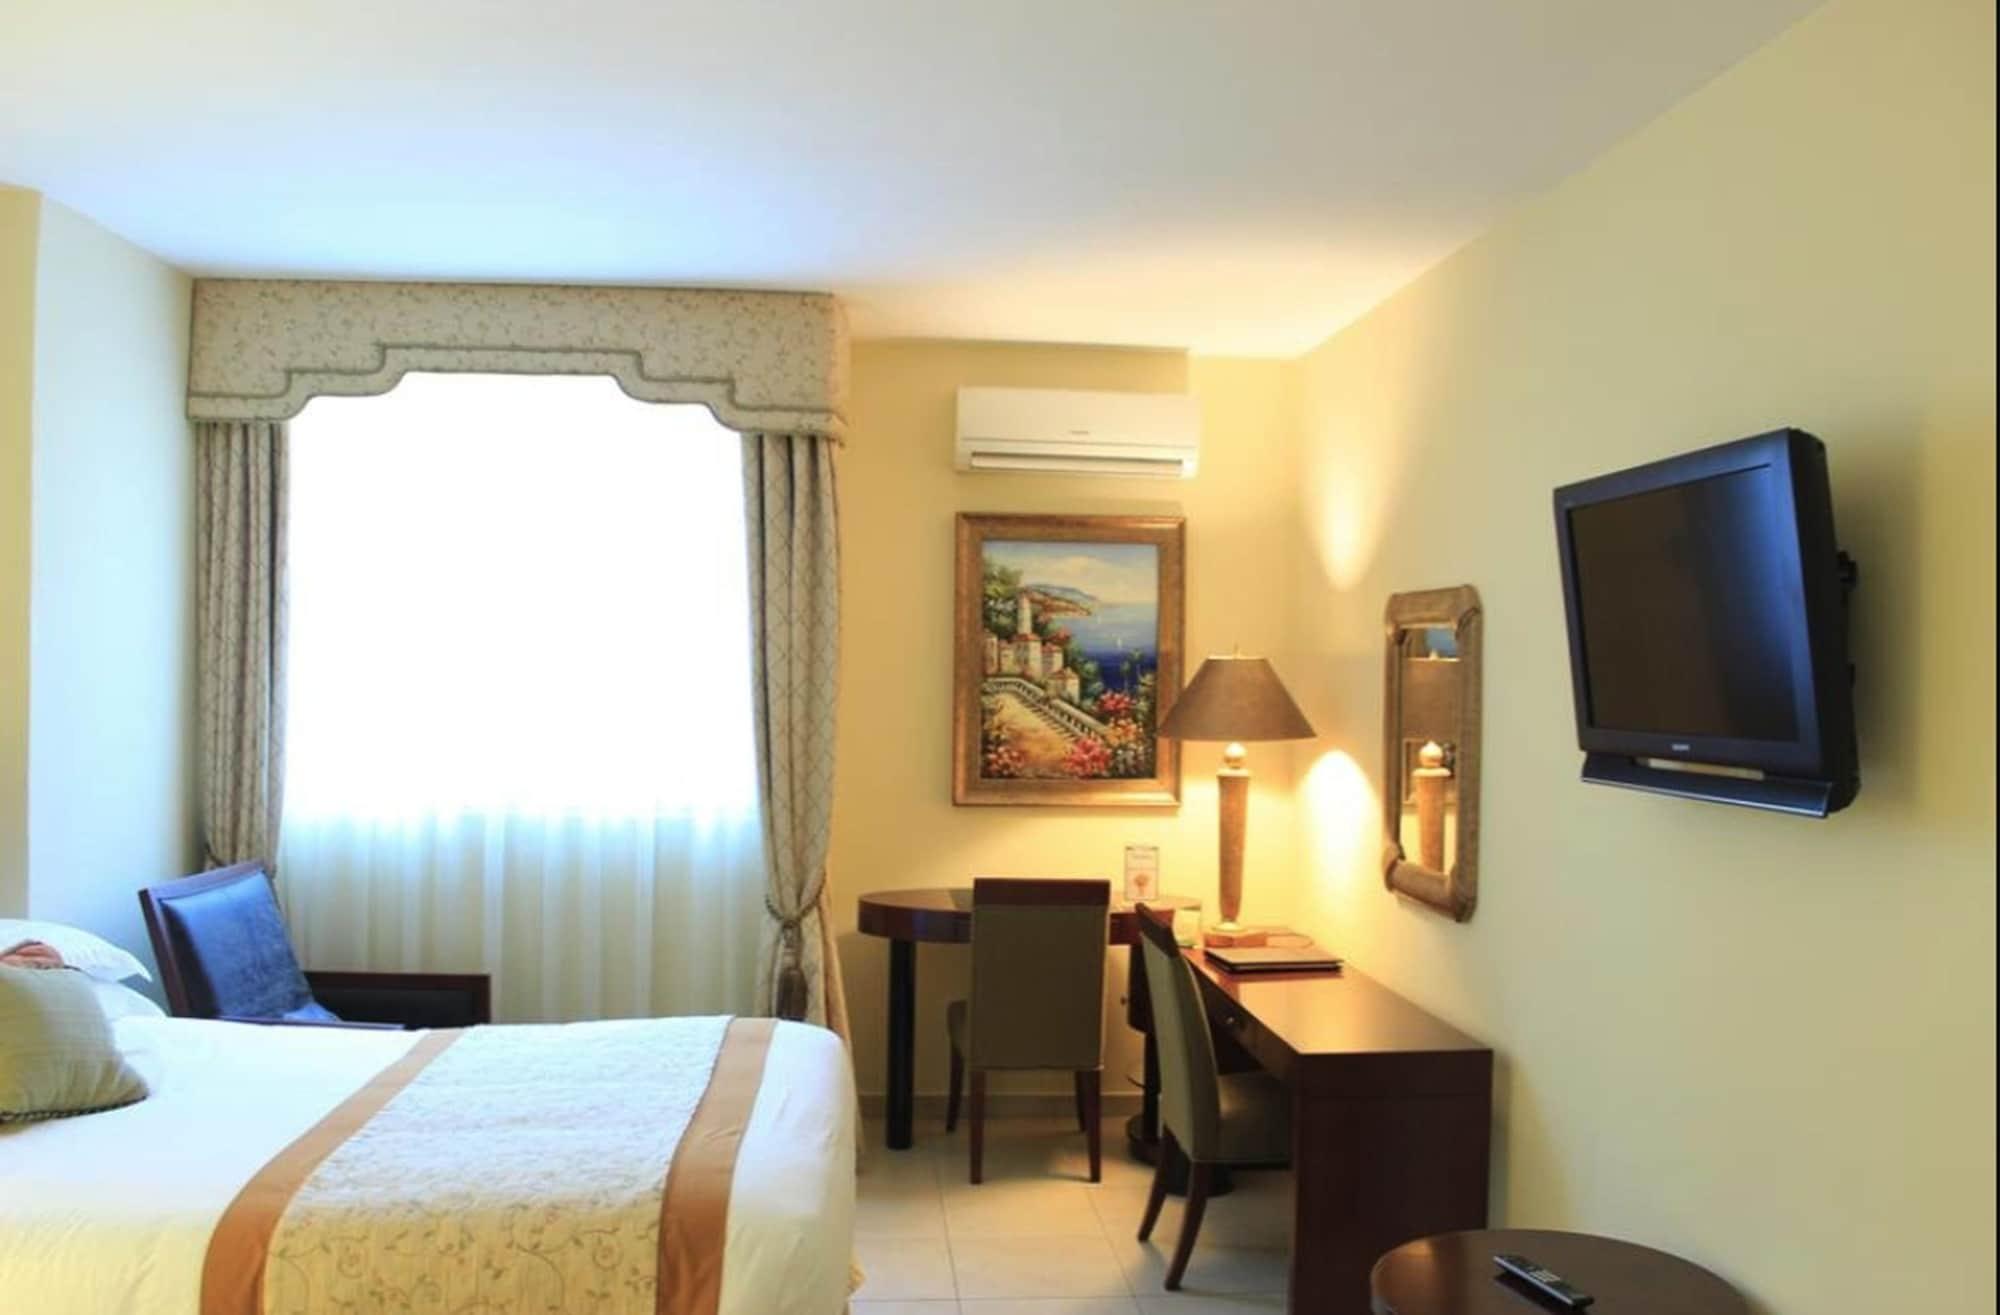 Toscana Inn Hotel Panama-Stad Buitenkant foto